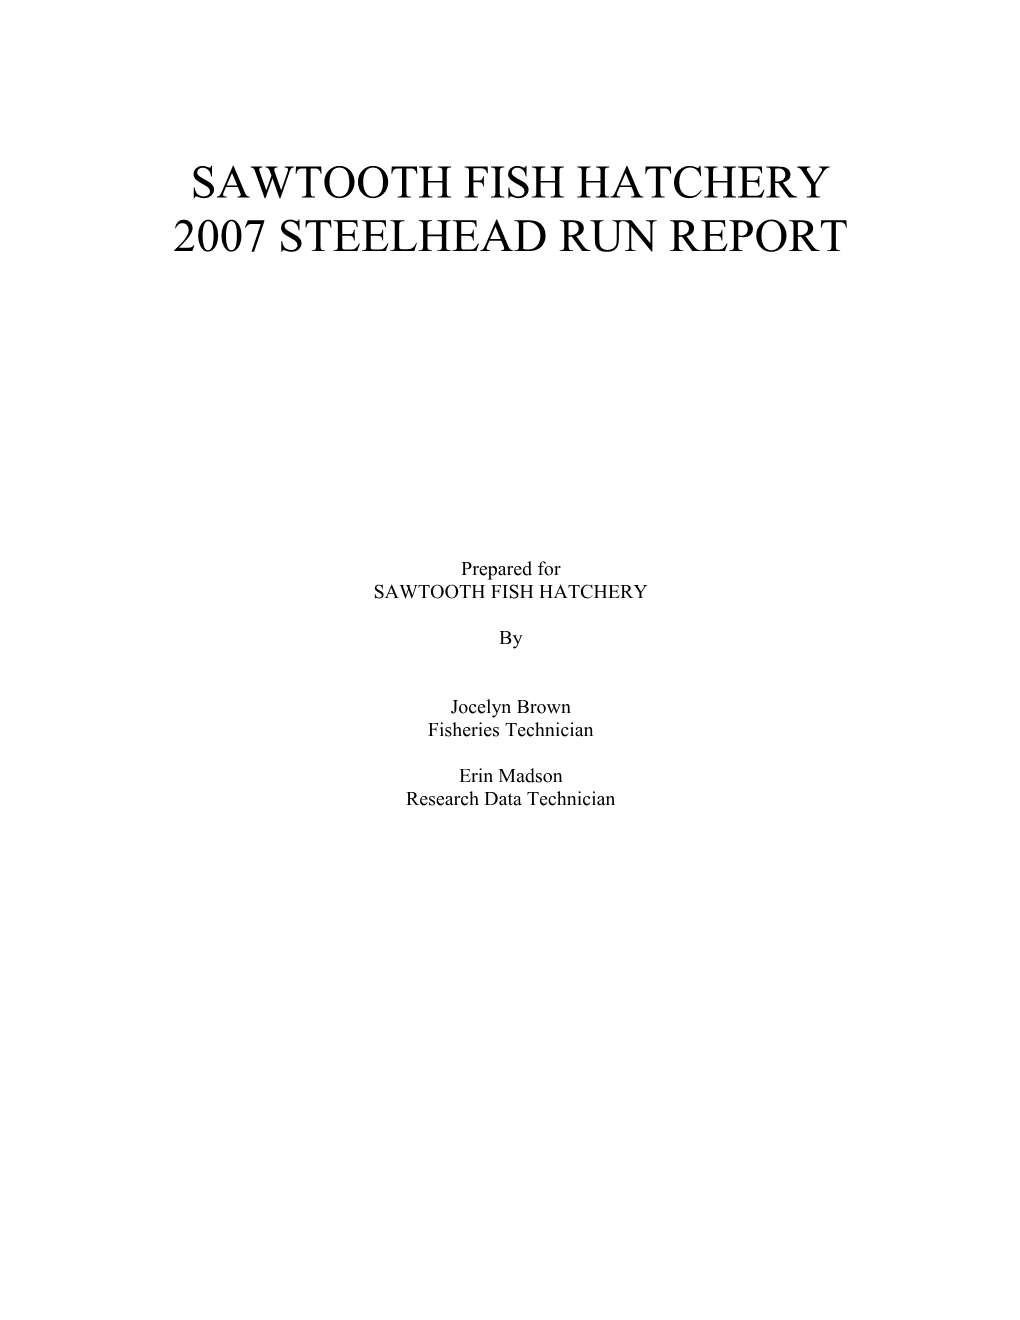 Sawtooth Fish Hatchery